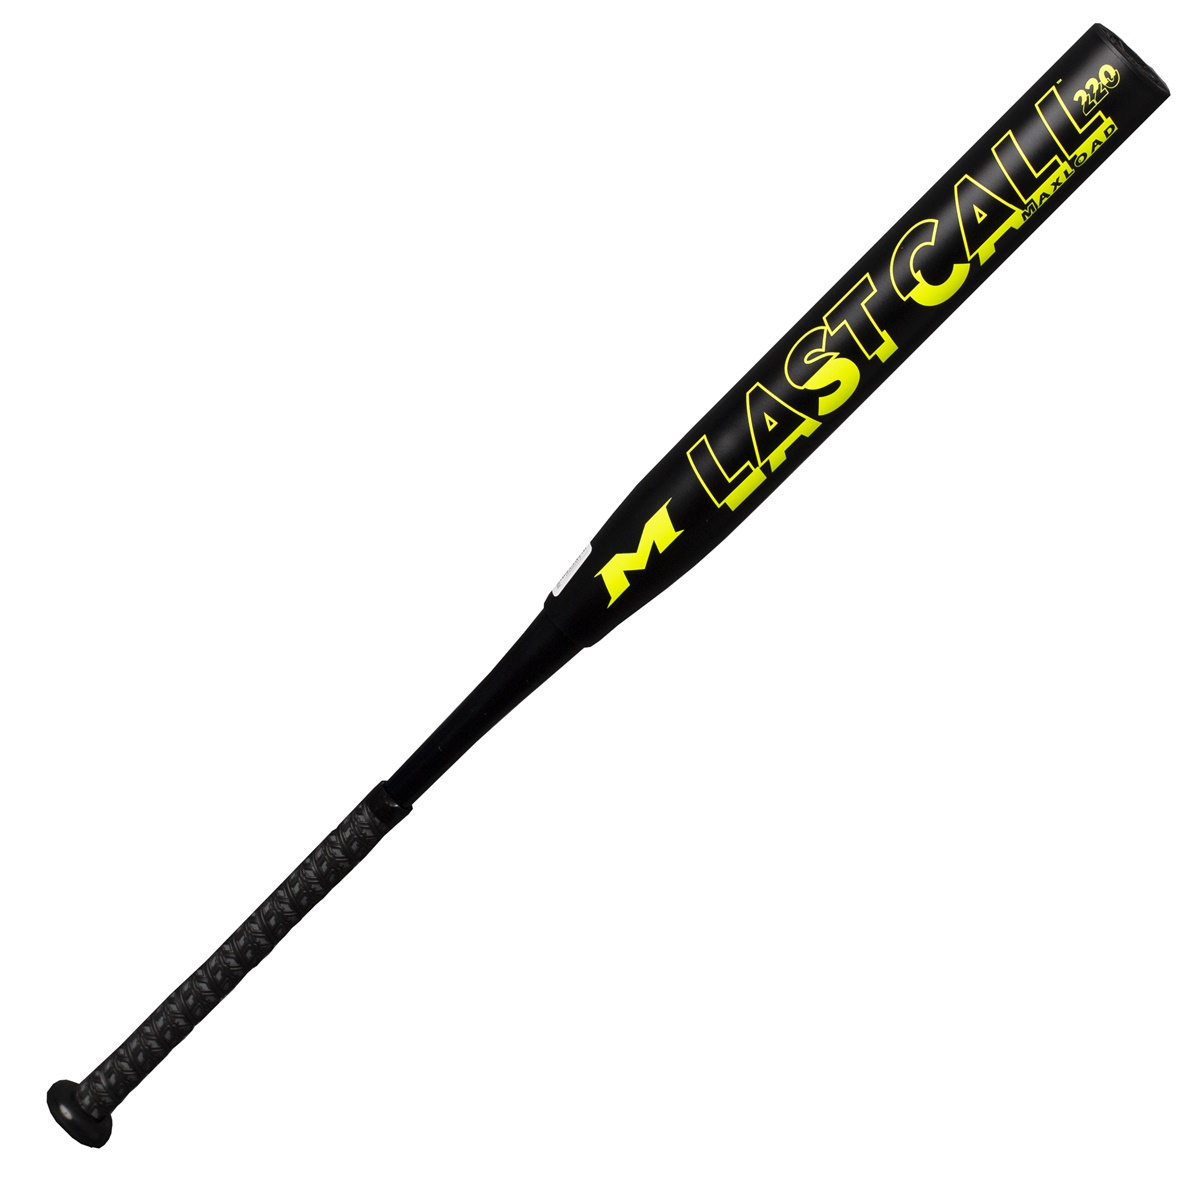 miken-last-call-14-barrel-maxload-usssa-slowpitch-softball-bat-34-inch-28-oz MLC14U-3-28 Miken 658925045523 Dont miss out on the 2021 Last Call Maxload USSSA bat!